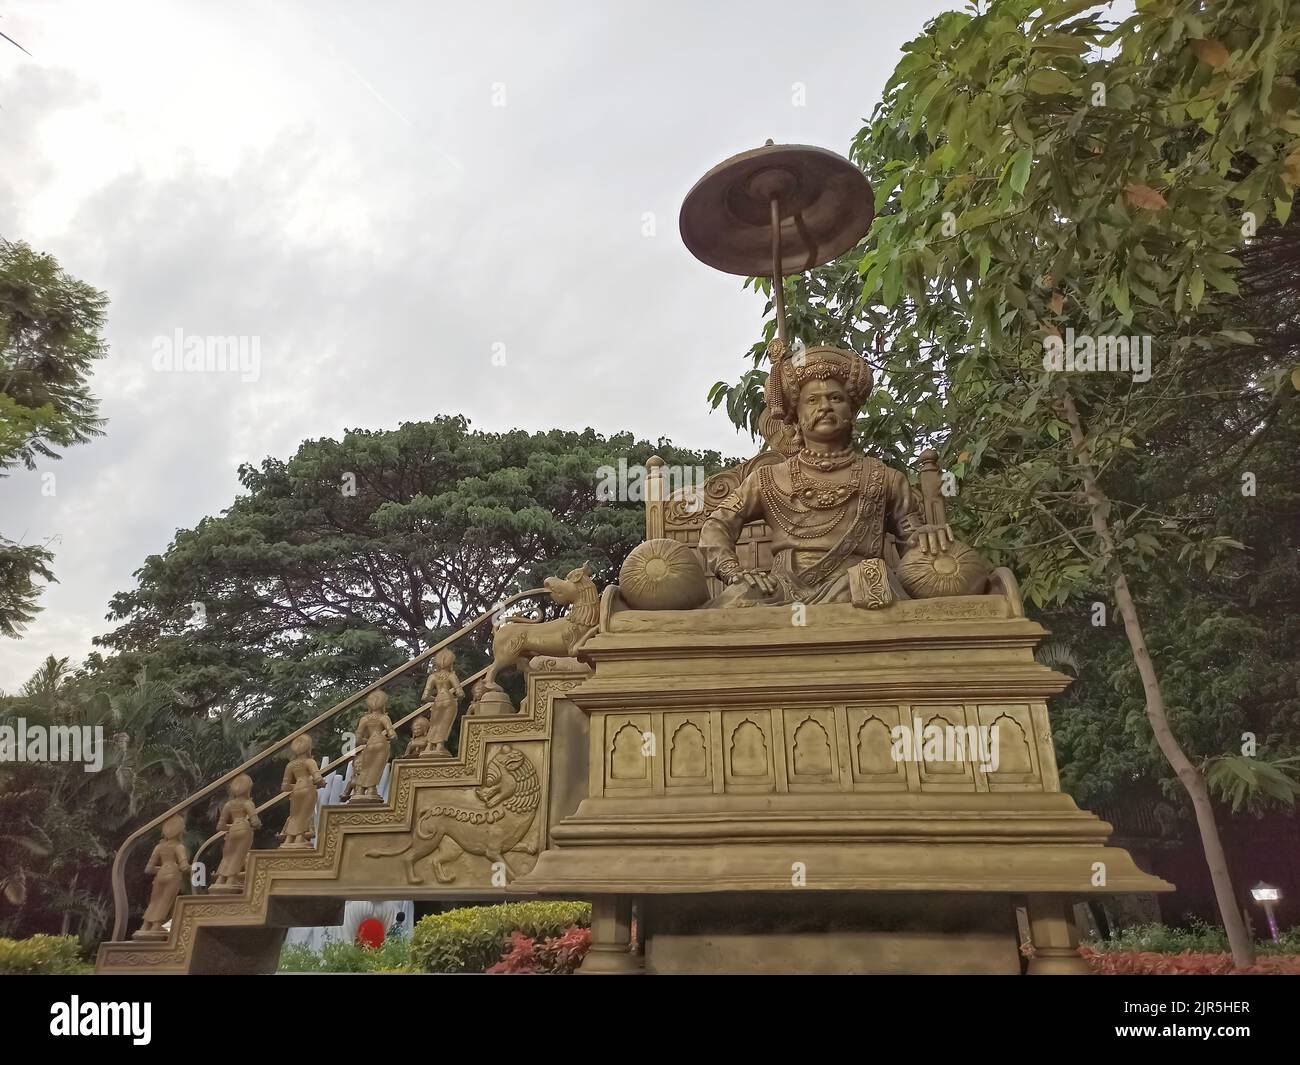 A Statue or Bust of Indian King Krishnadevaraya of Vijayanagara Empire installed in a park in India. A Hindu Monarch from Tuluva dynasty Stock Photo